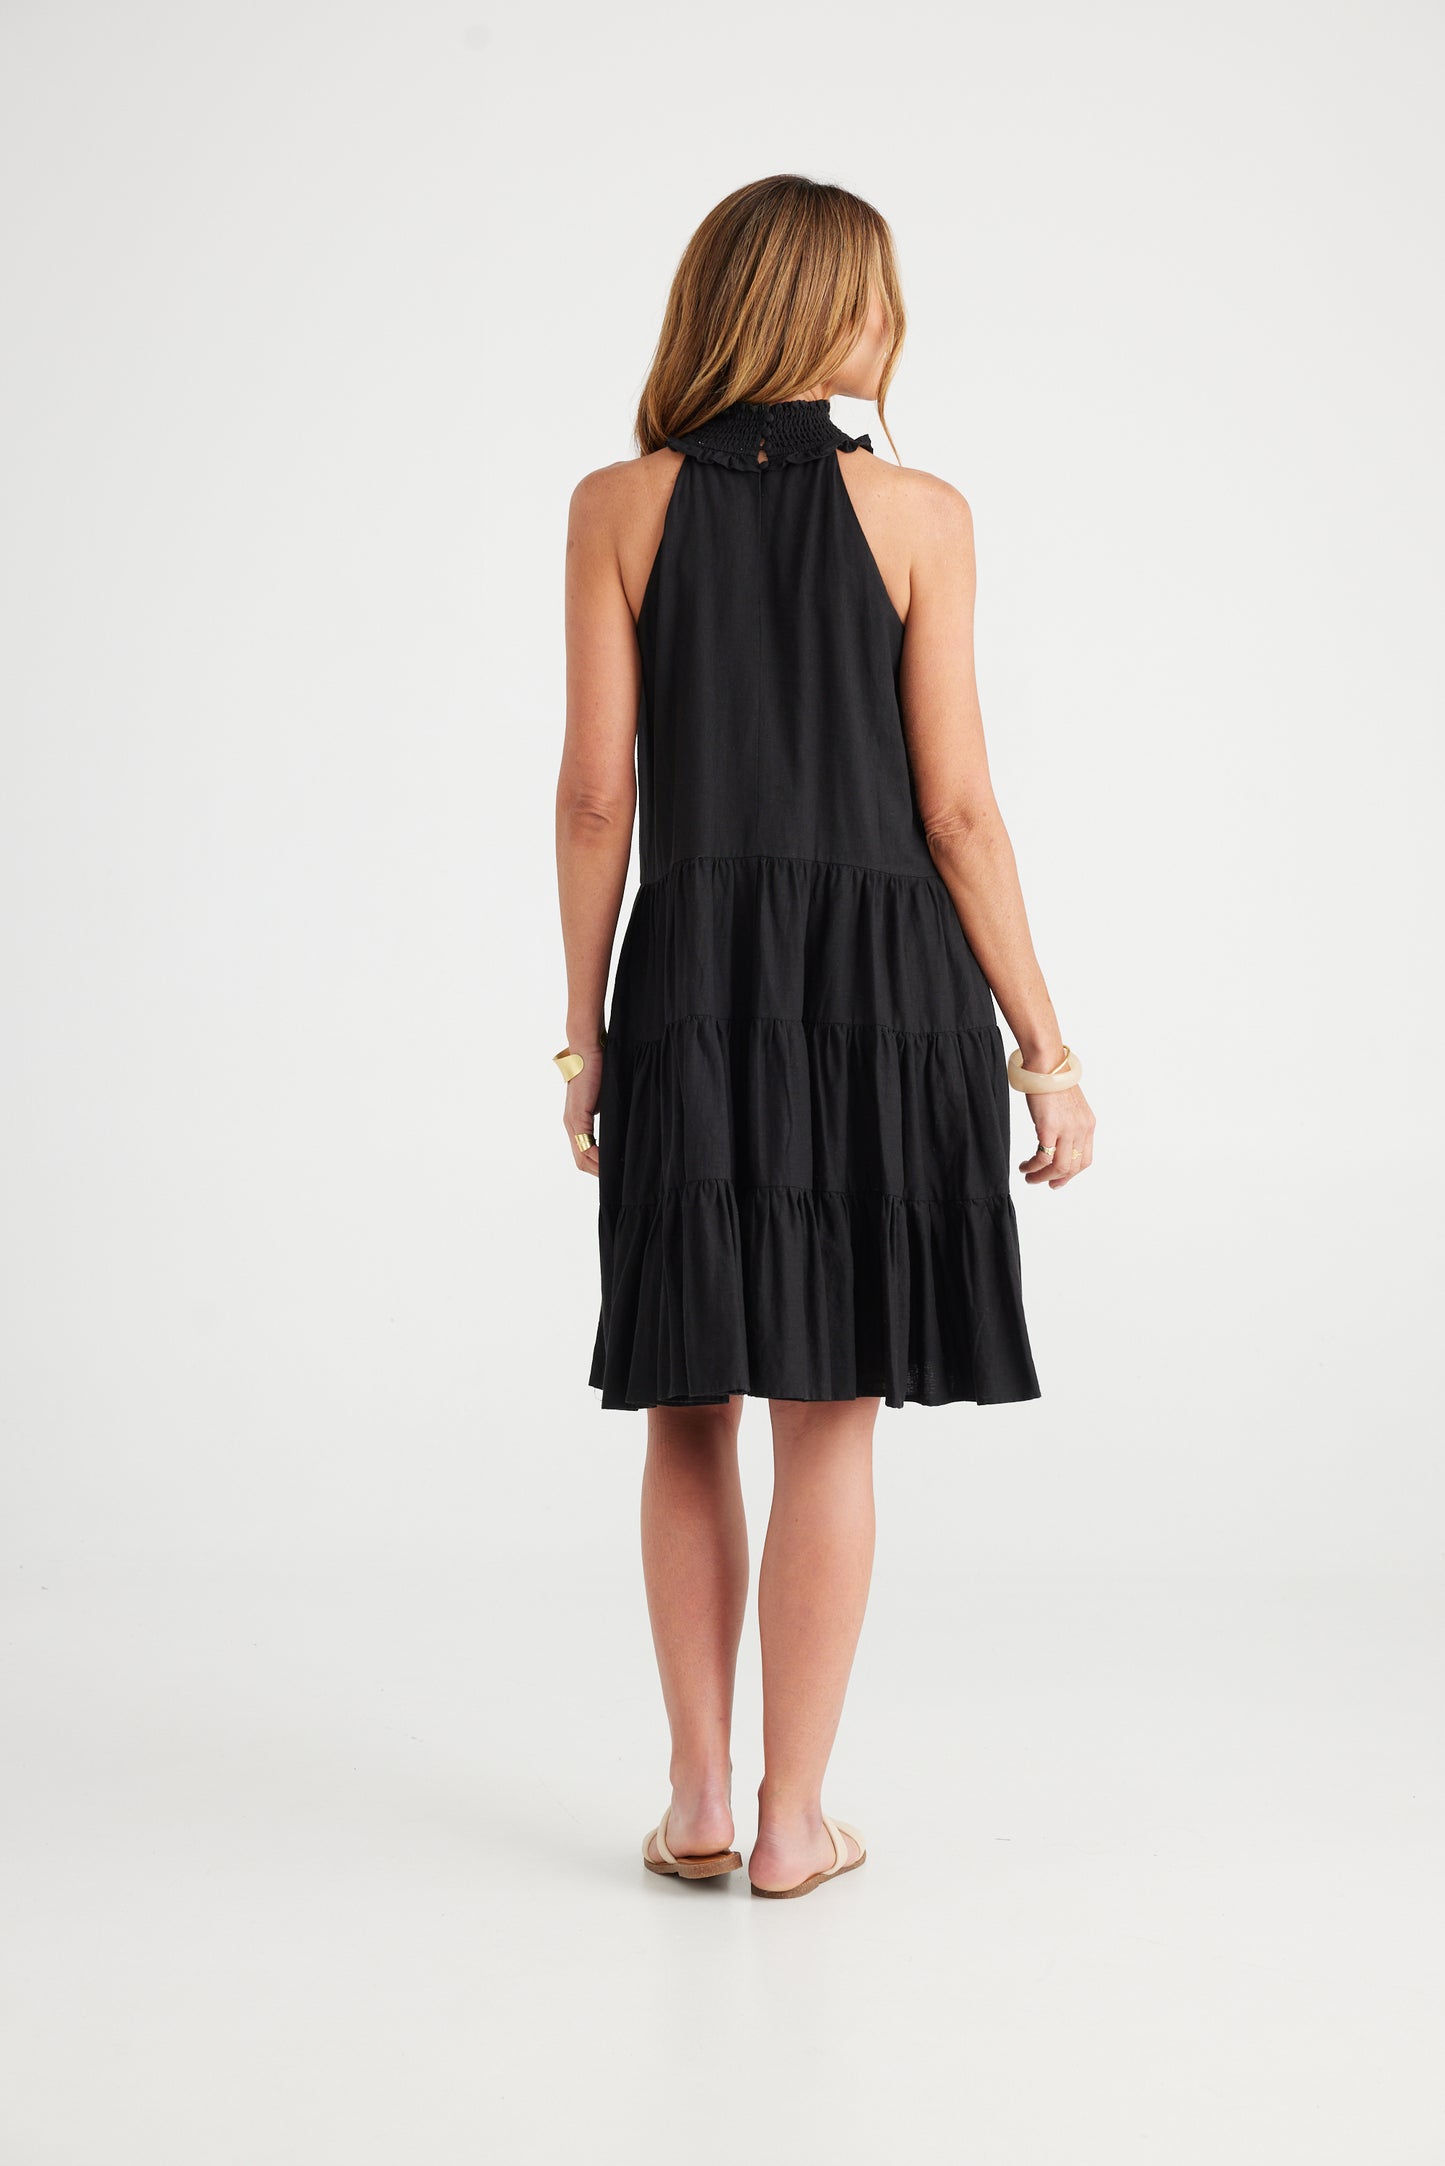 Brave + True - Cleo Dress in Black | BT7109-1